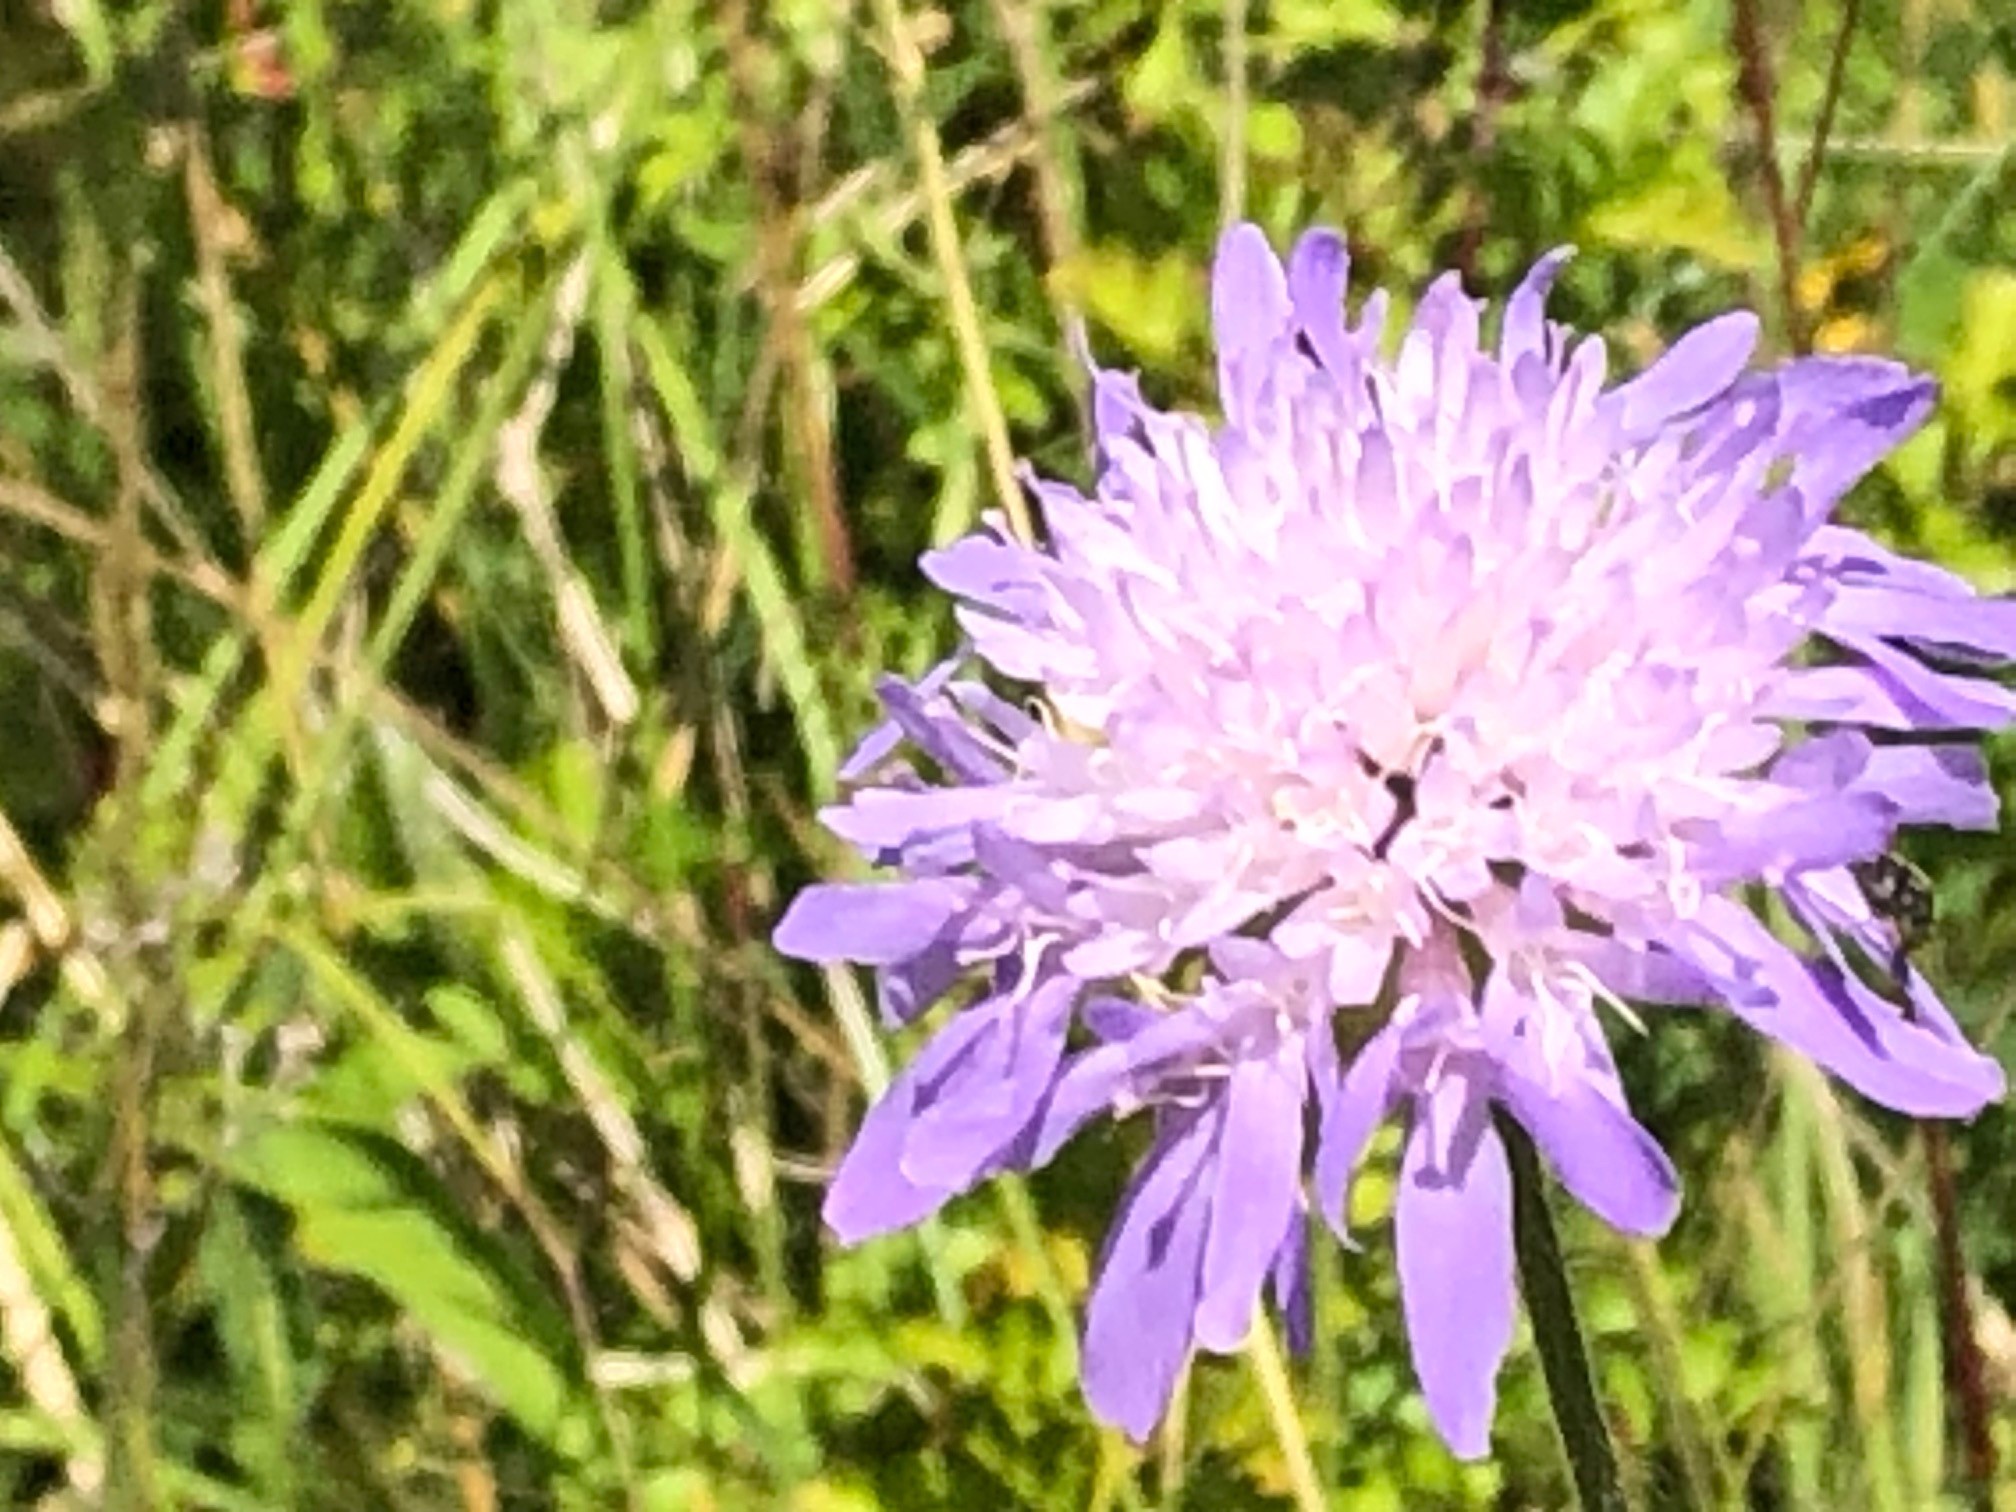 Large purple flower in grassland